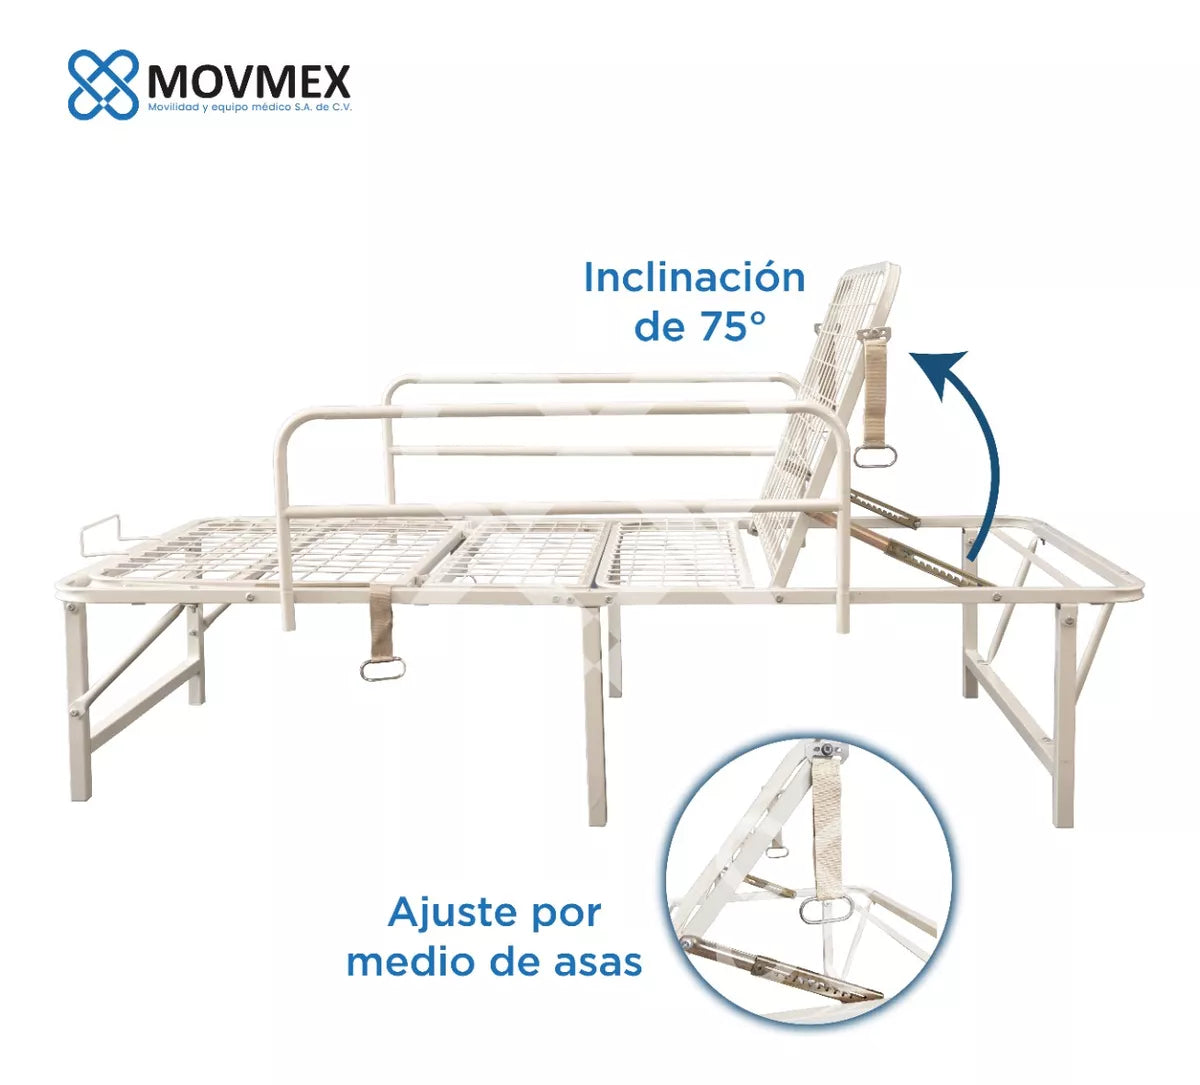 Cama Hospitalaria Manual 2 Posiciones Plegable Economica Movmex